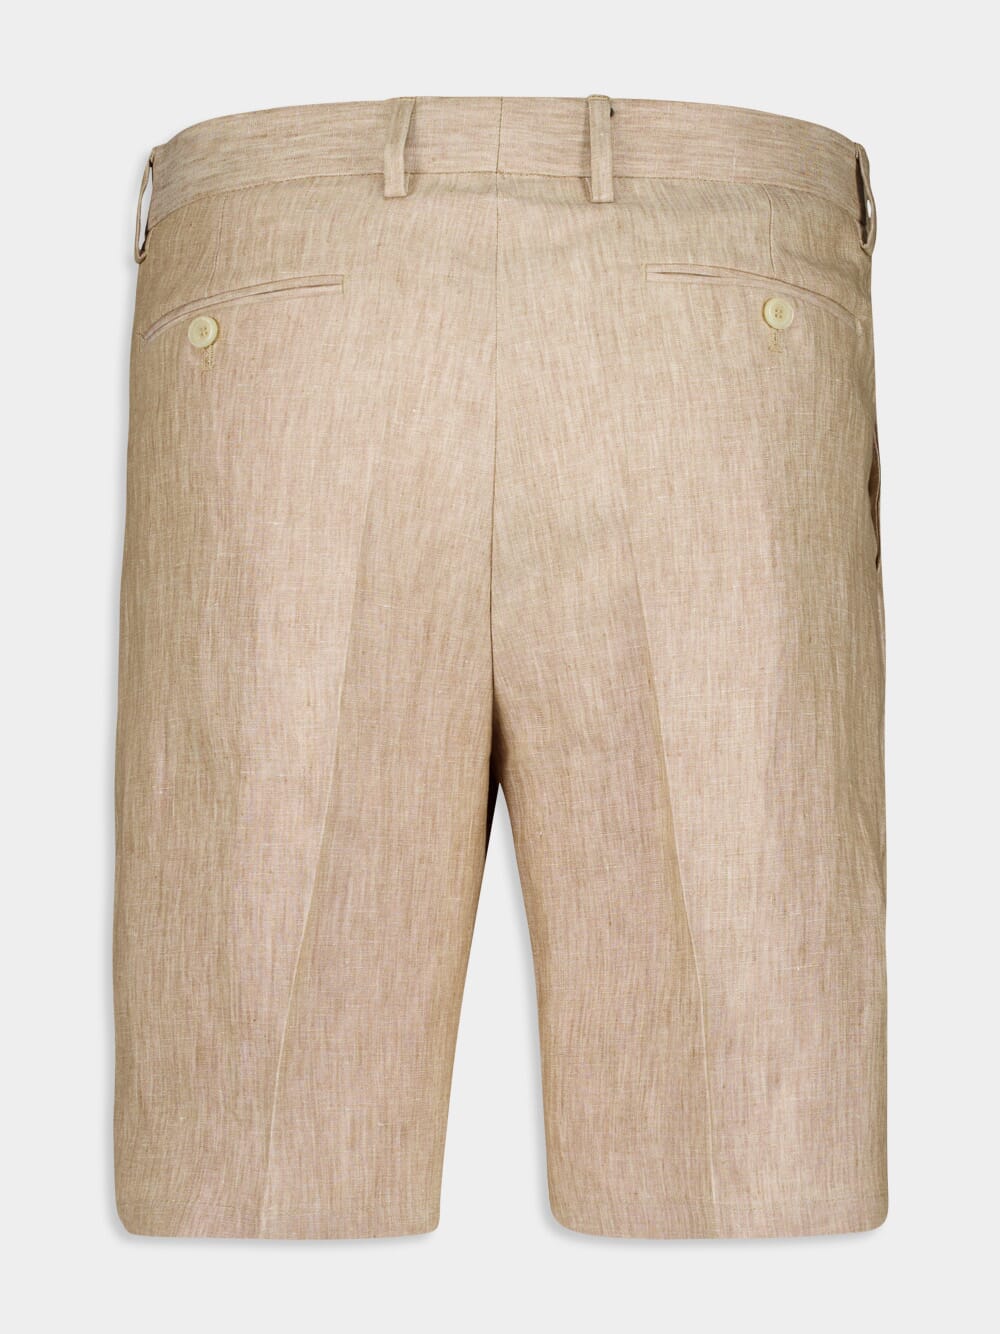 Bermuda Beige Linen Shorts